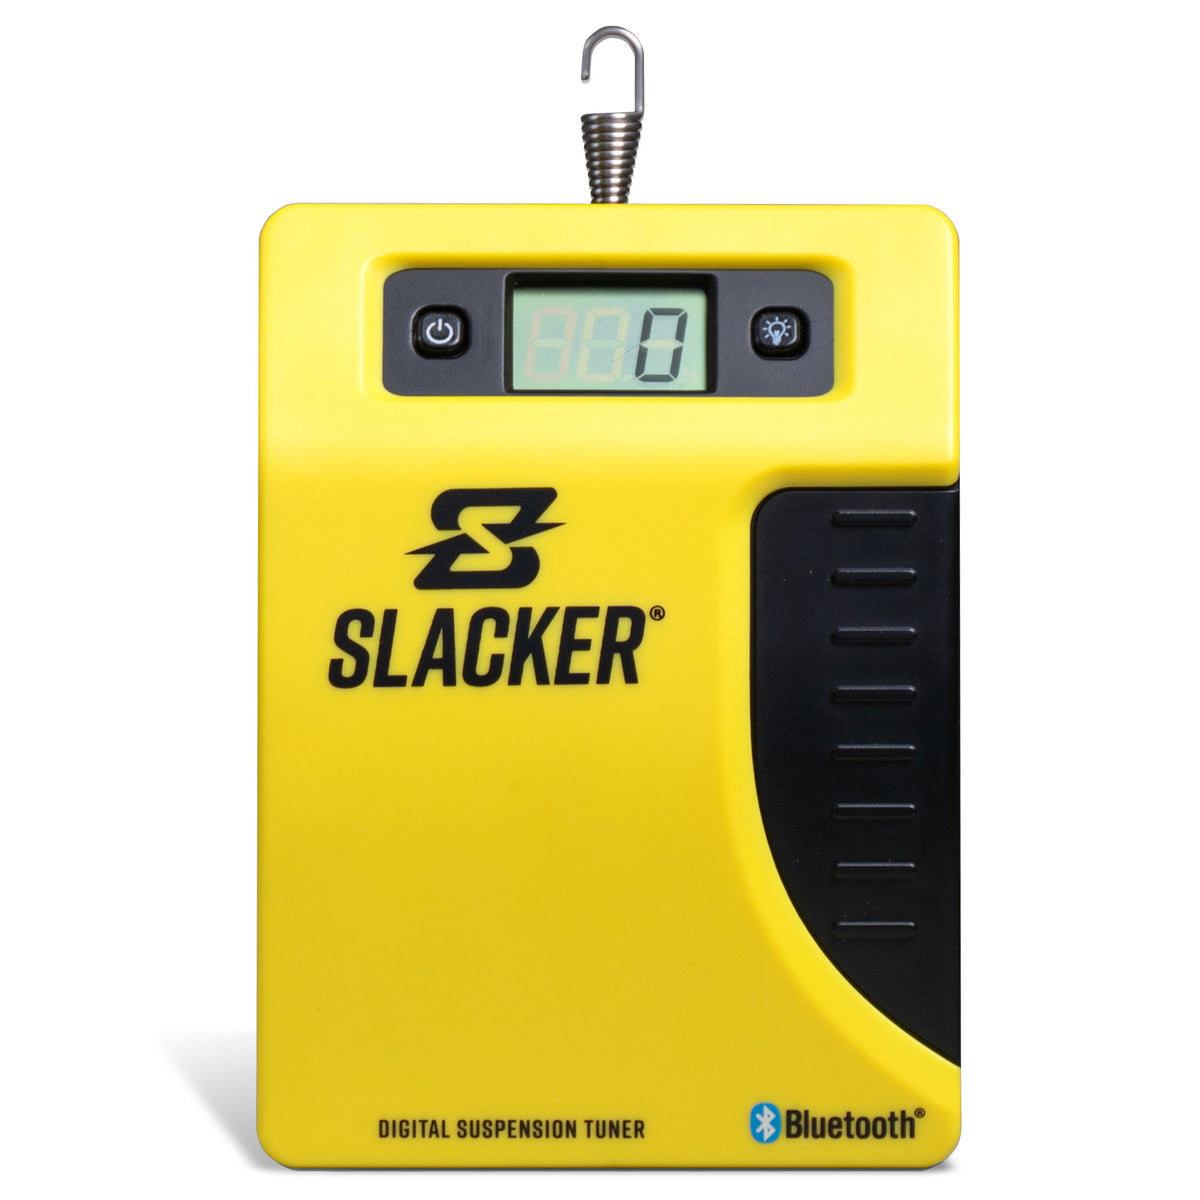 Slacker MTB Special Offer - Save $75